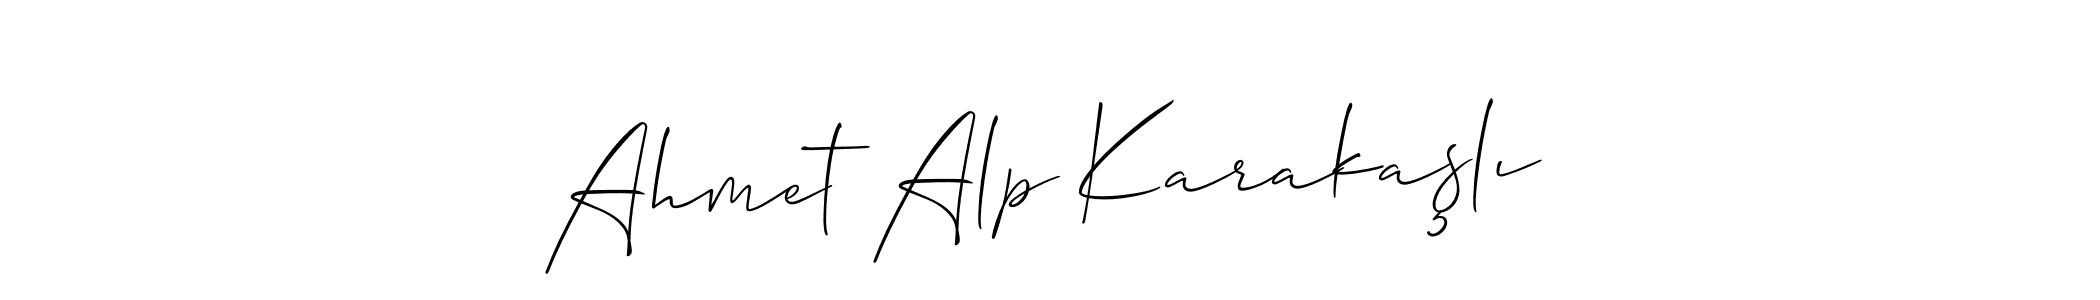 Best and Professional Signature Style for Ahmet Alp Karakaşlı. Allison_Script Best Signature Style Collection. Ahmet Alp Karakaşlı signature style 2 images and pictures png